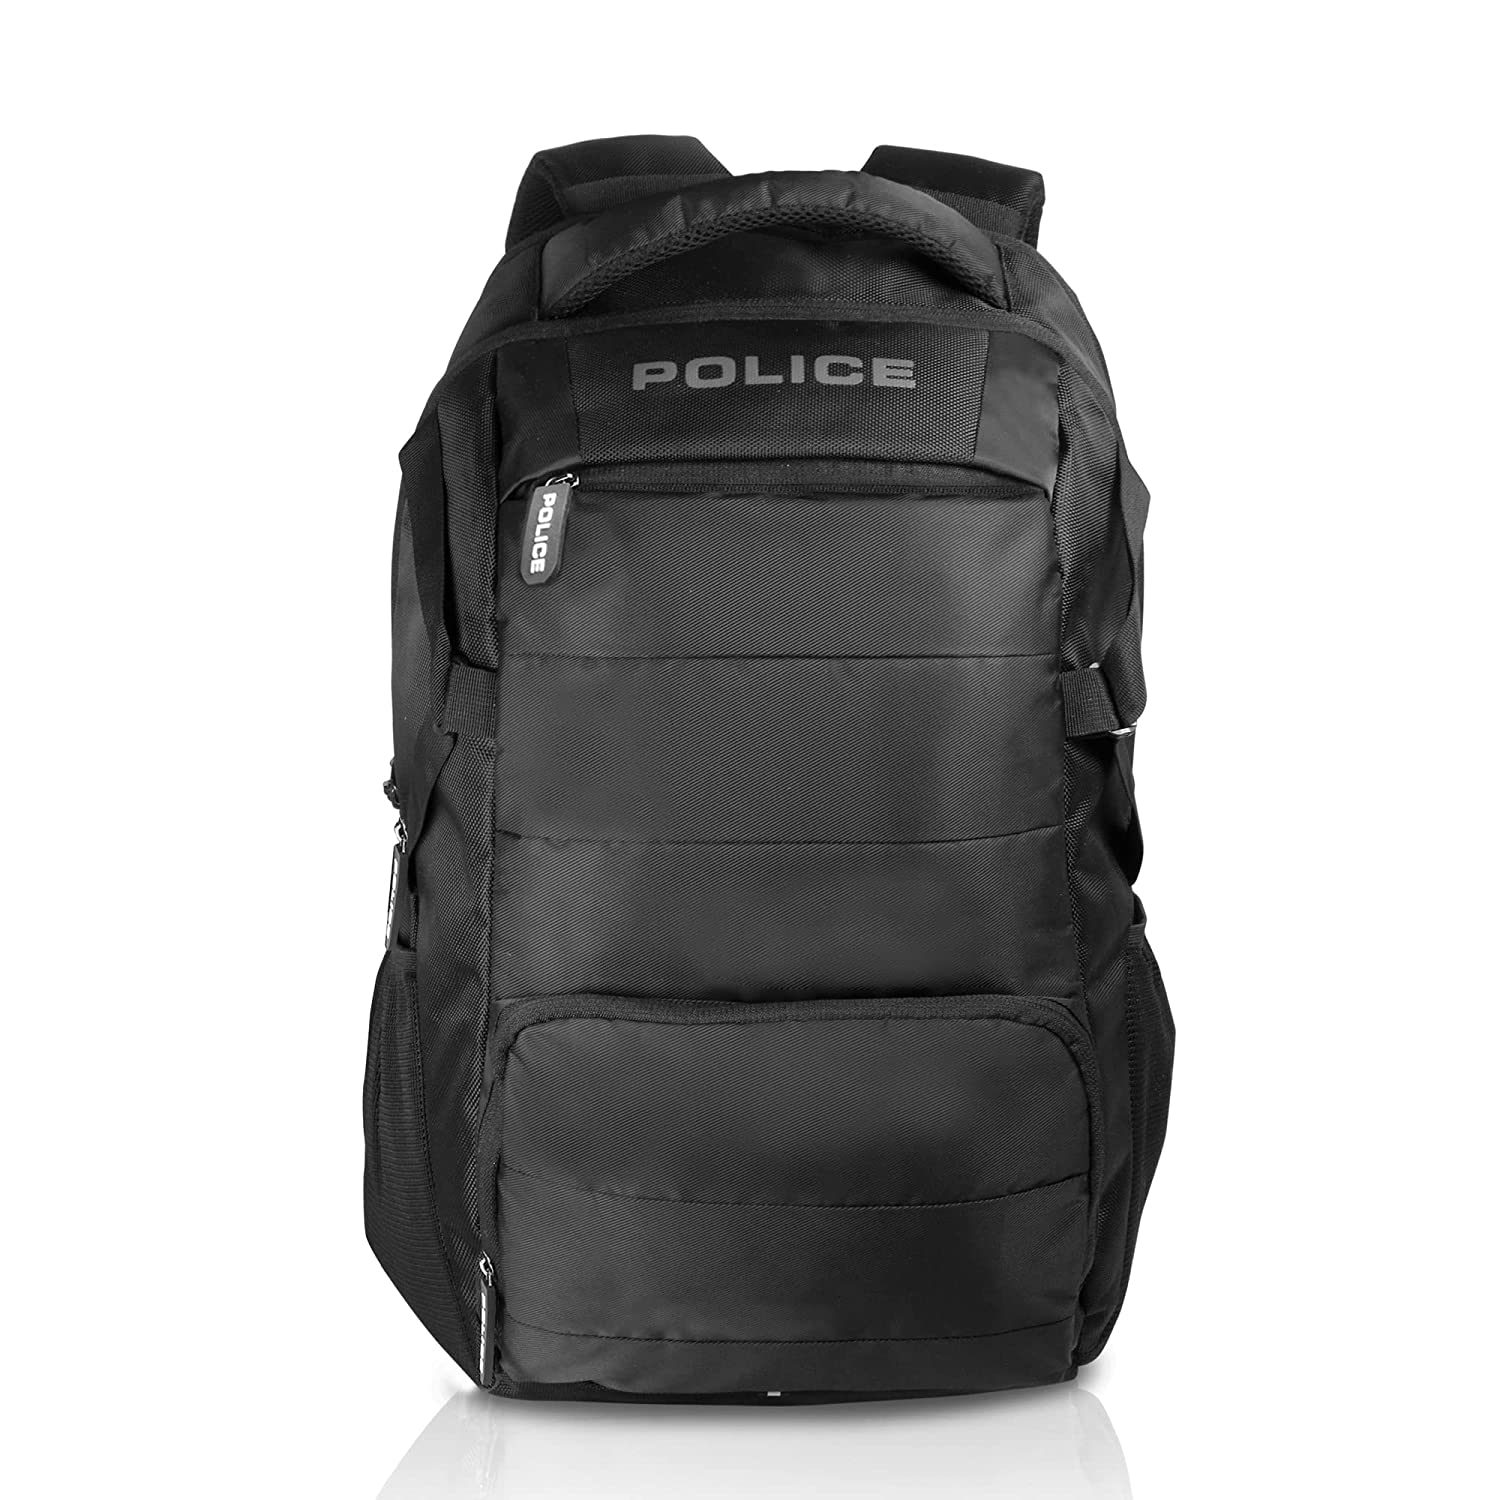 POLICE Laptop/Travel Backpack